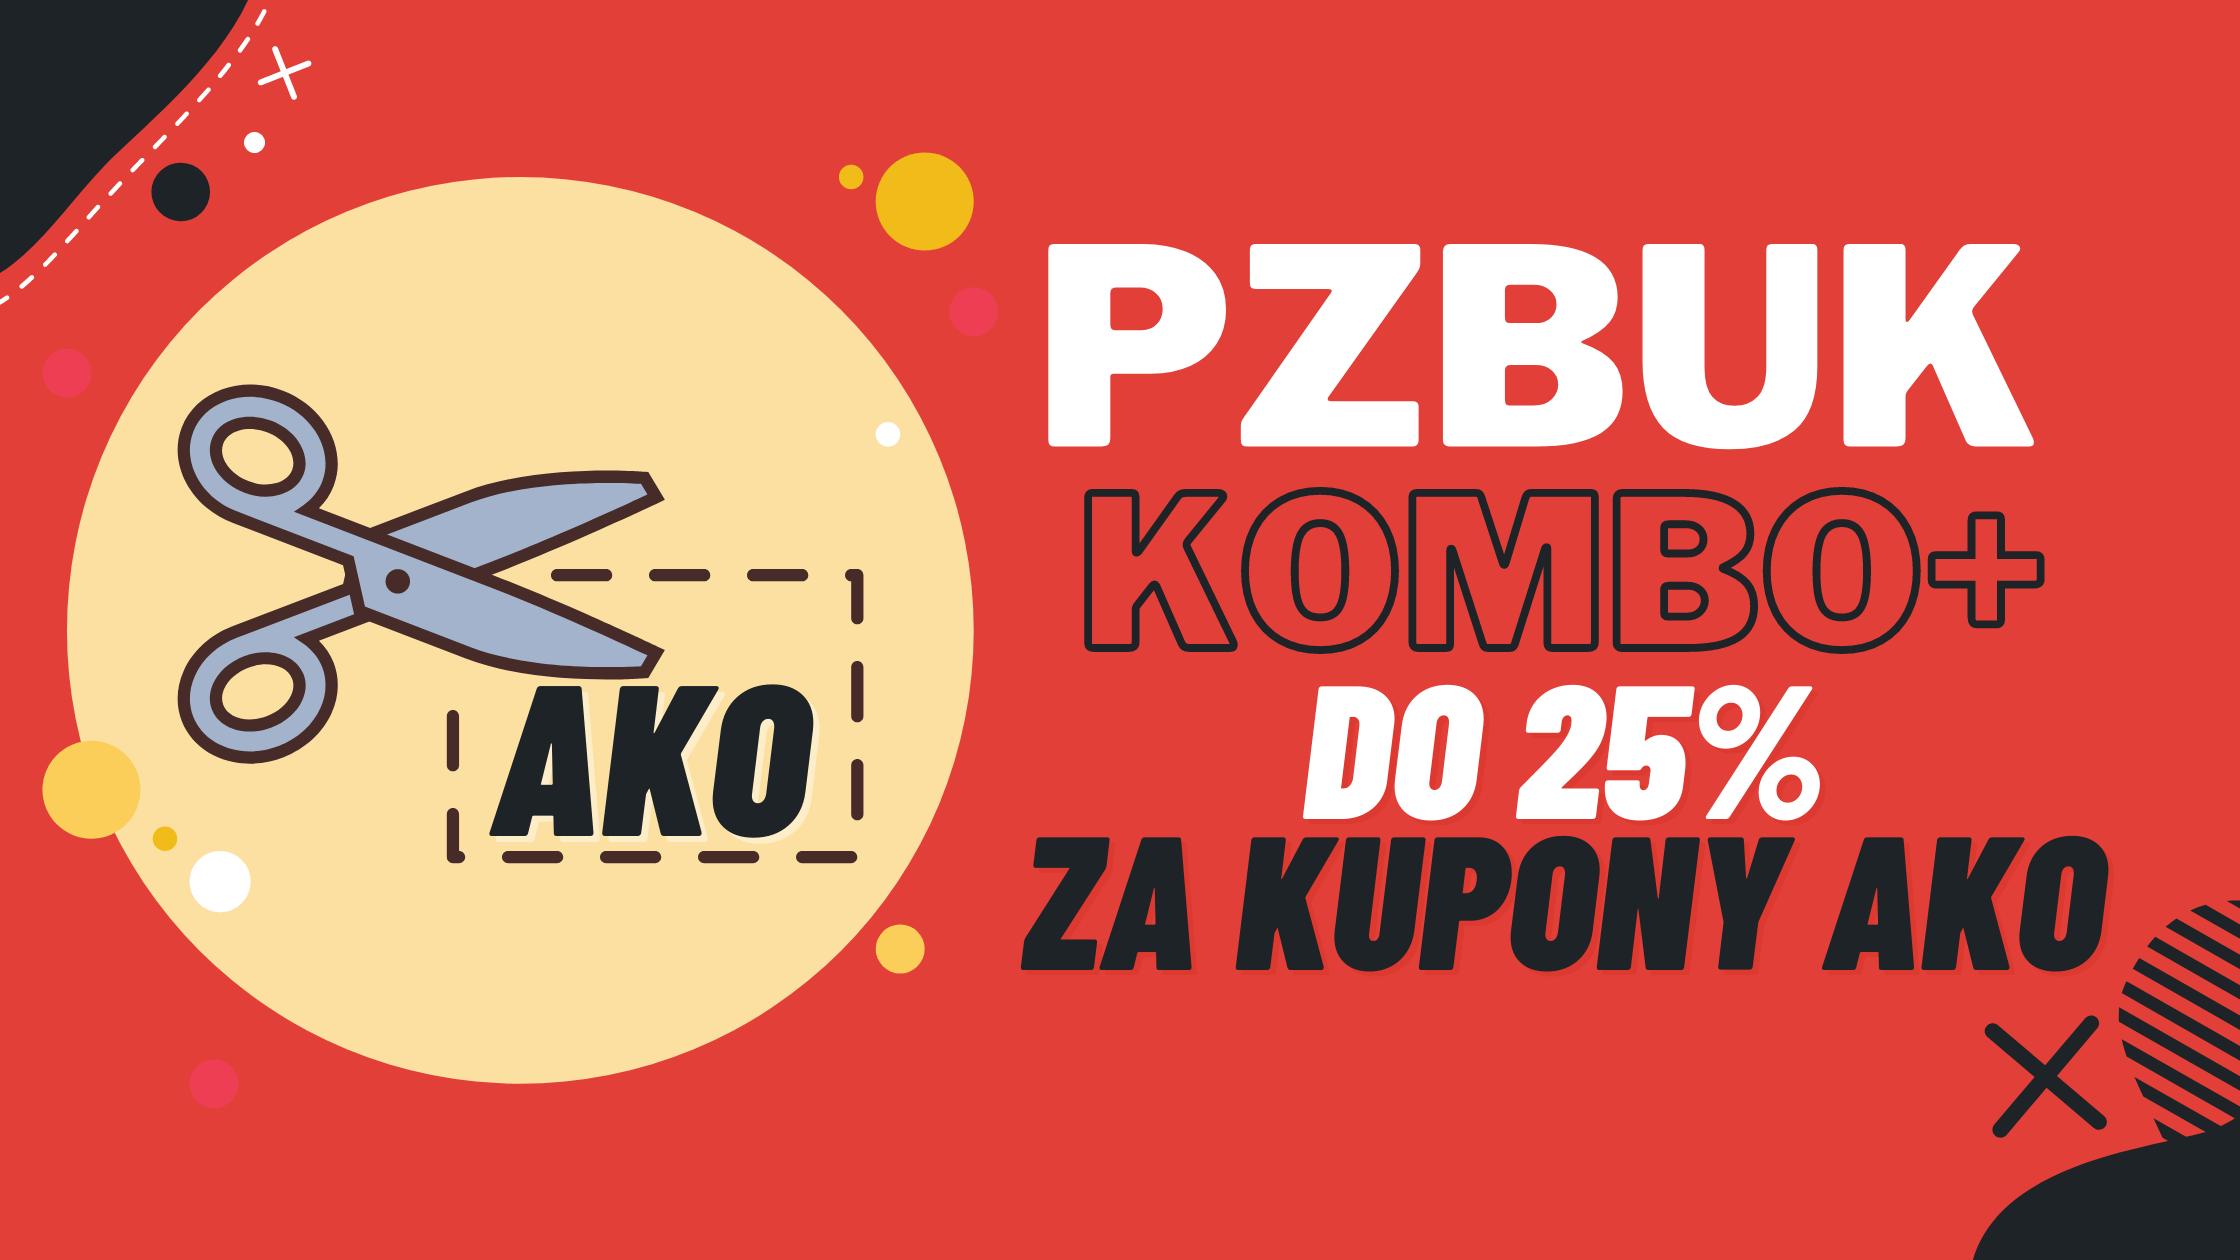 Bukmacher PZBuk promocja Kombi do 25% za kupony AKO